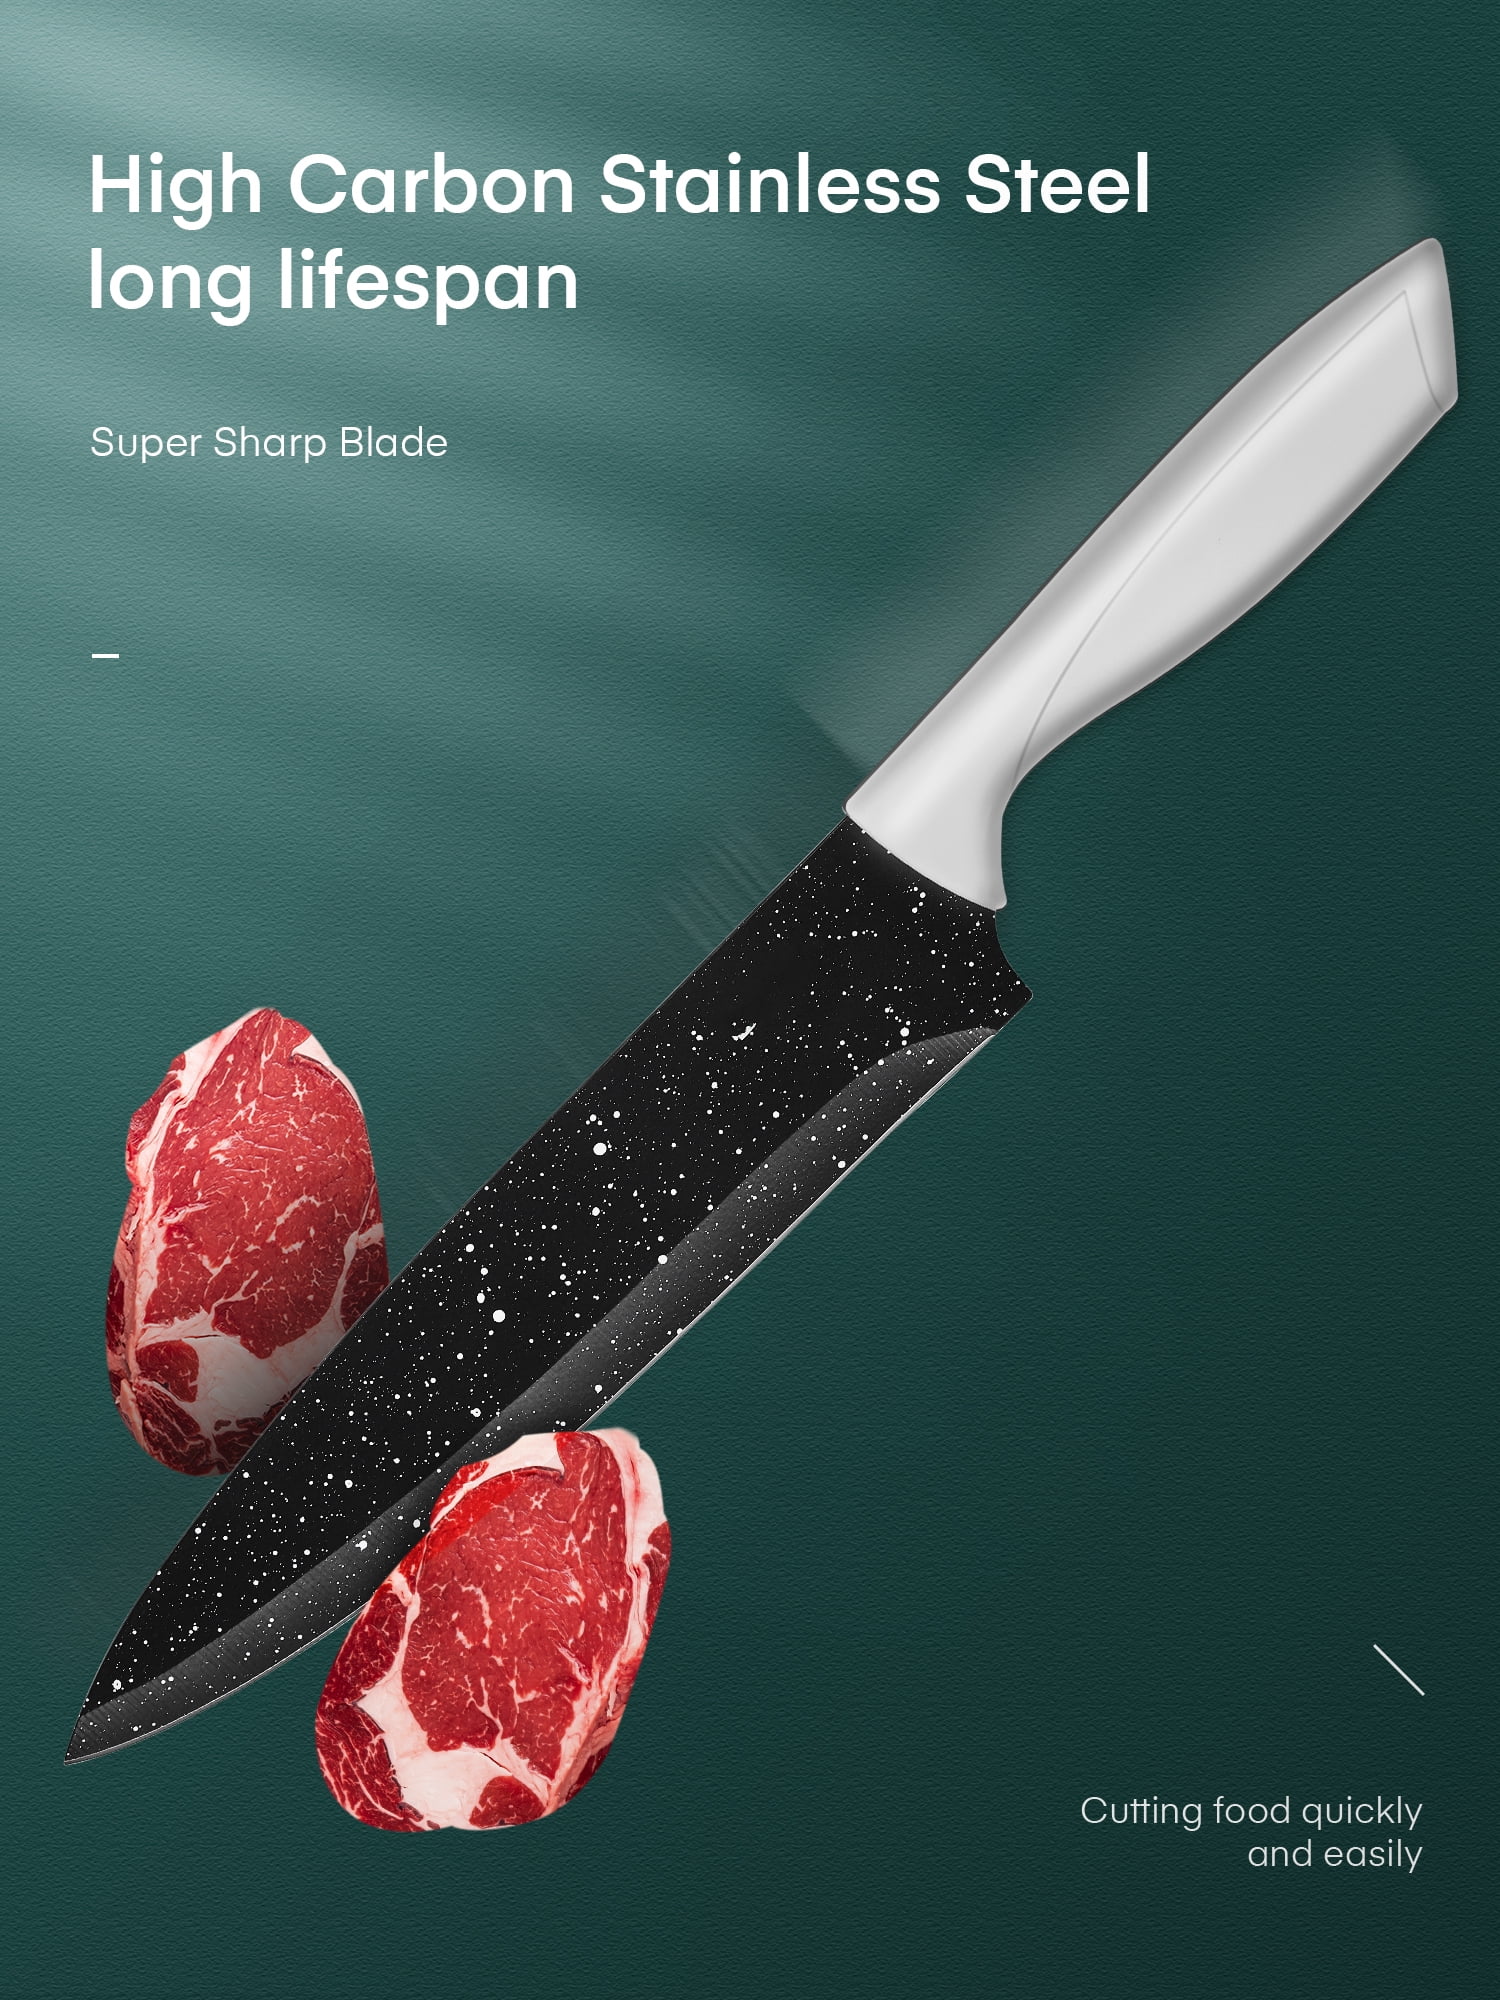 DEIK 16pcs Knife Set Chef's Knife Knife Block Wooden Handle with Scissors  Sharpening Steel DHL Steak